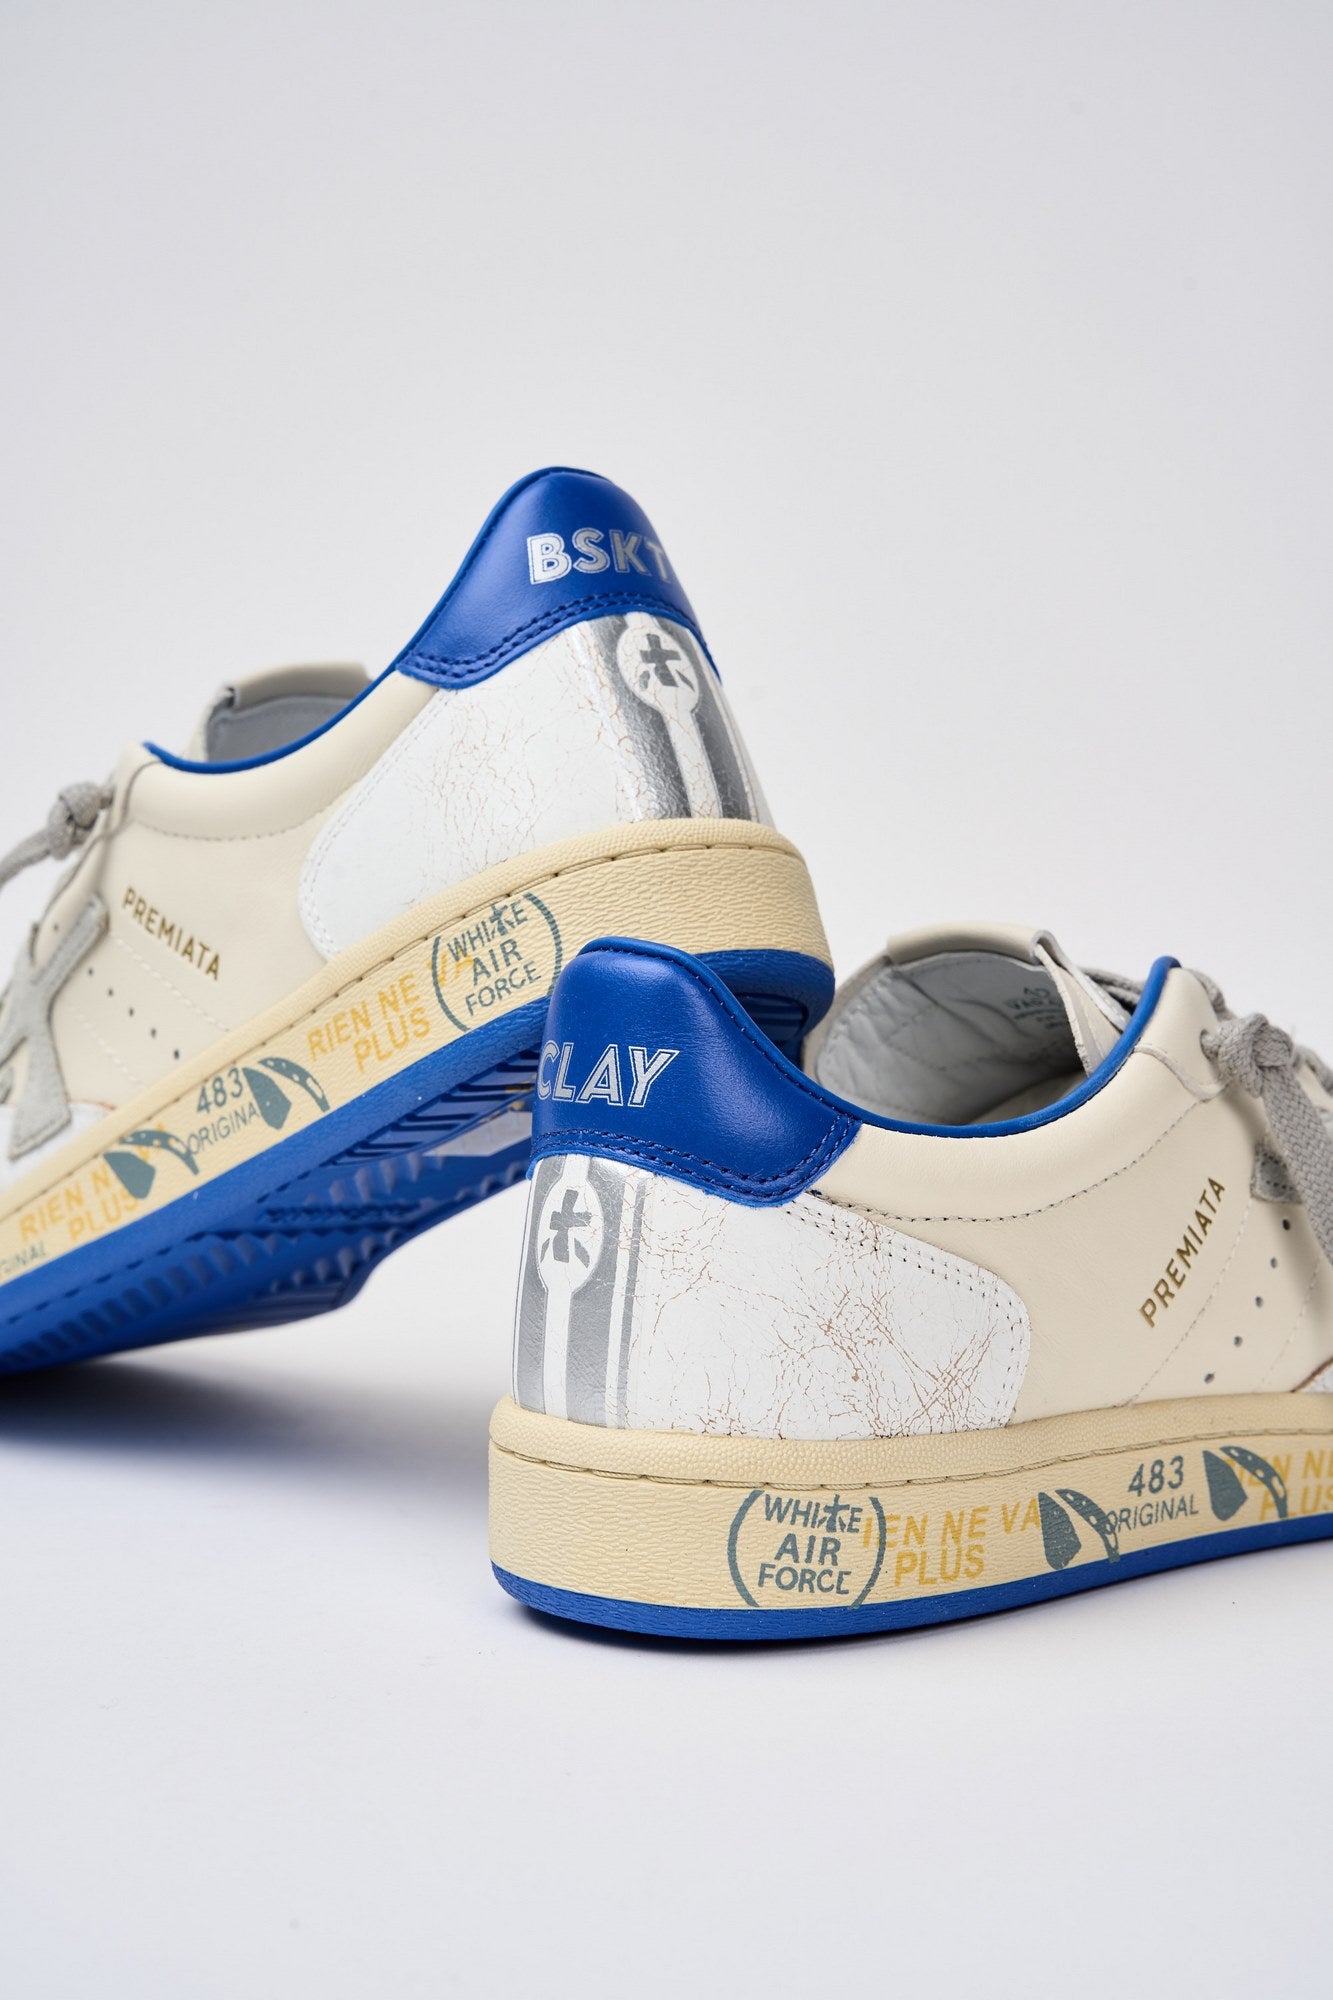 Premiata Sneaker Basket Clay in Leather/Suede Beige/Light Blue-5